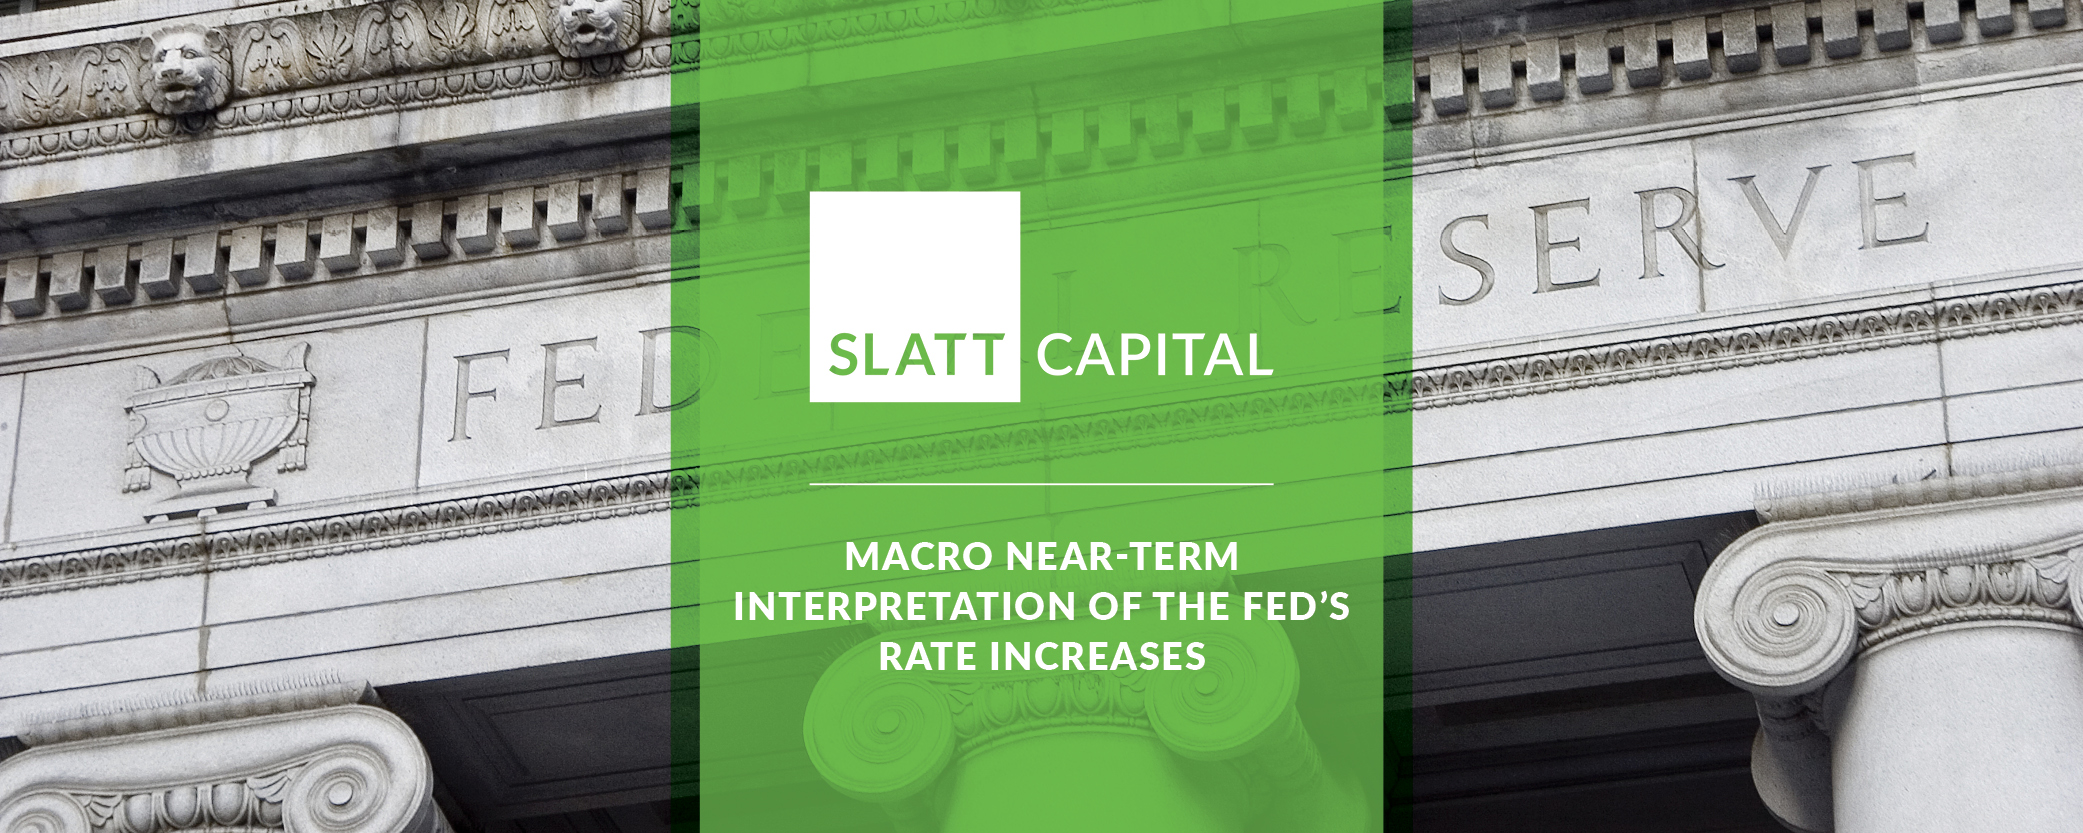 Macro near-term interpretation of the fed’s rate increases